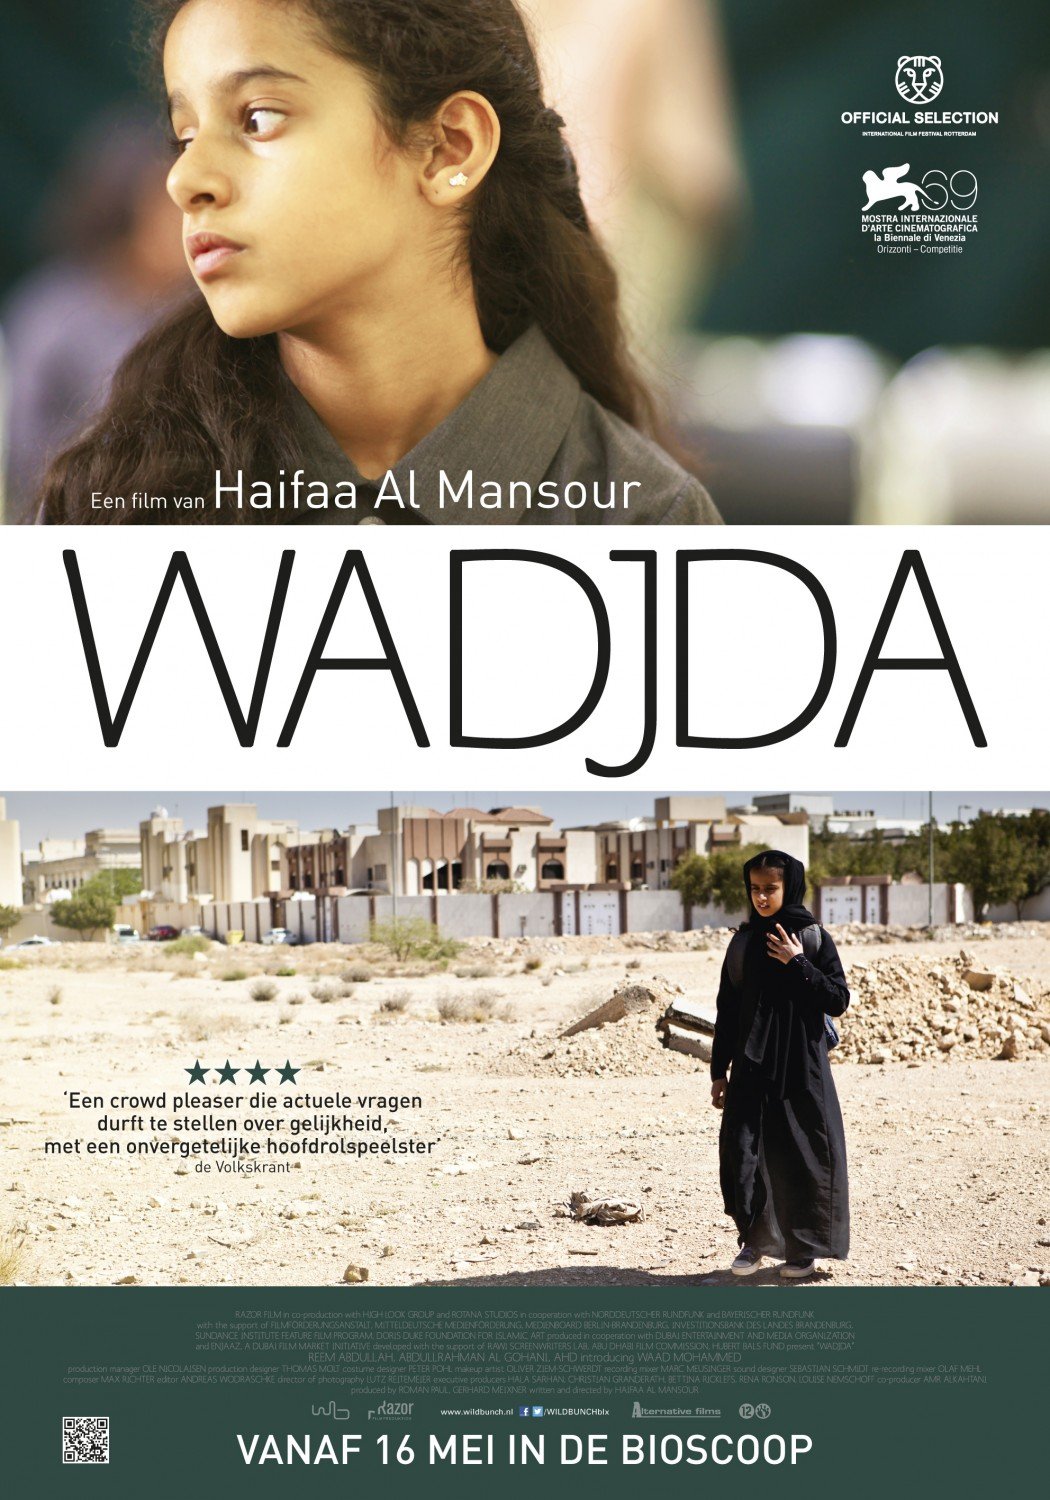 Arabic poster of the movie Wadjda